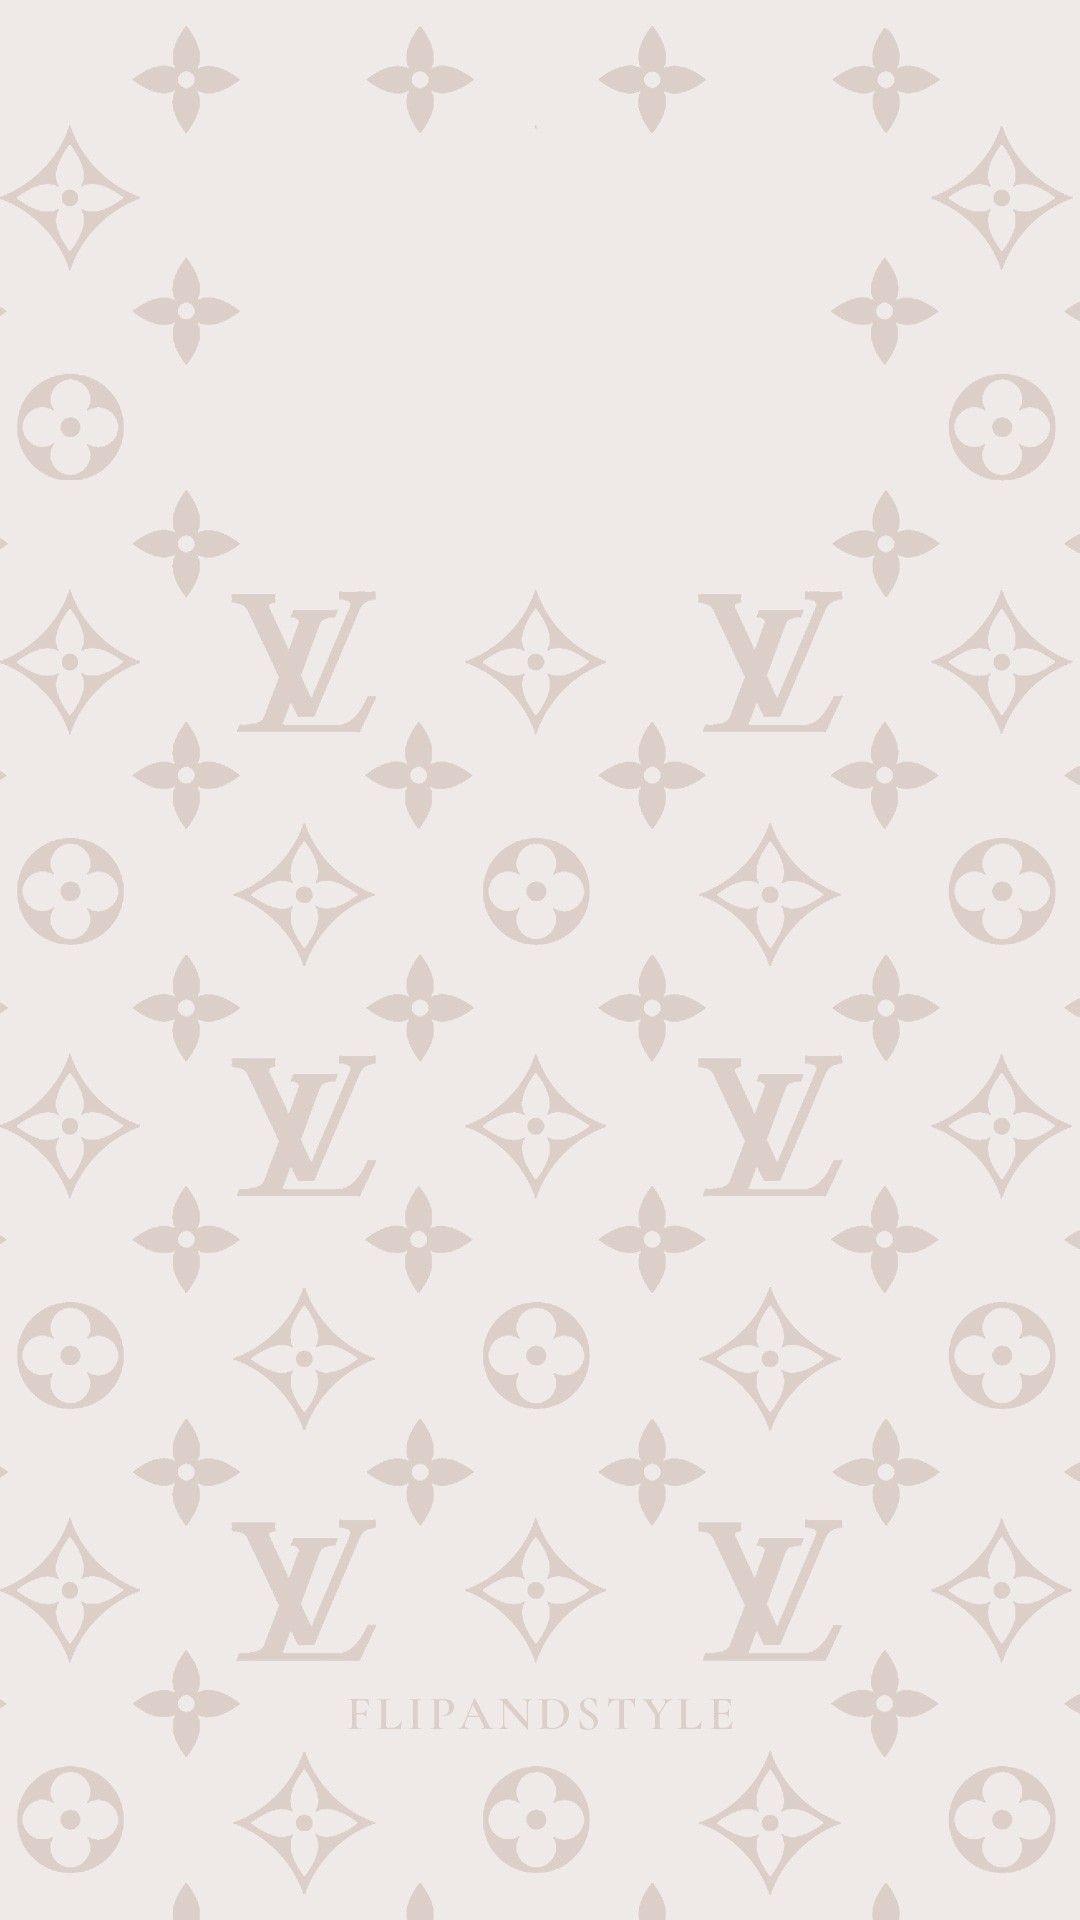 Louis Vuitton Logo Wallpaper In 2021 B85  Louis vuitton iphone wallpaper,  Apple watch wallpaper, Luis vuitton